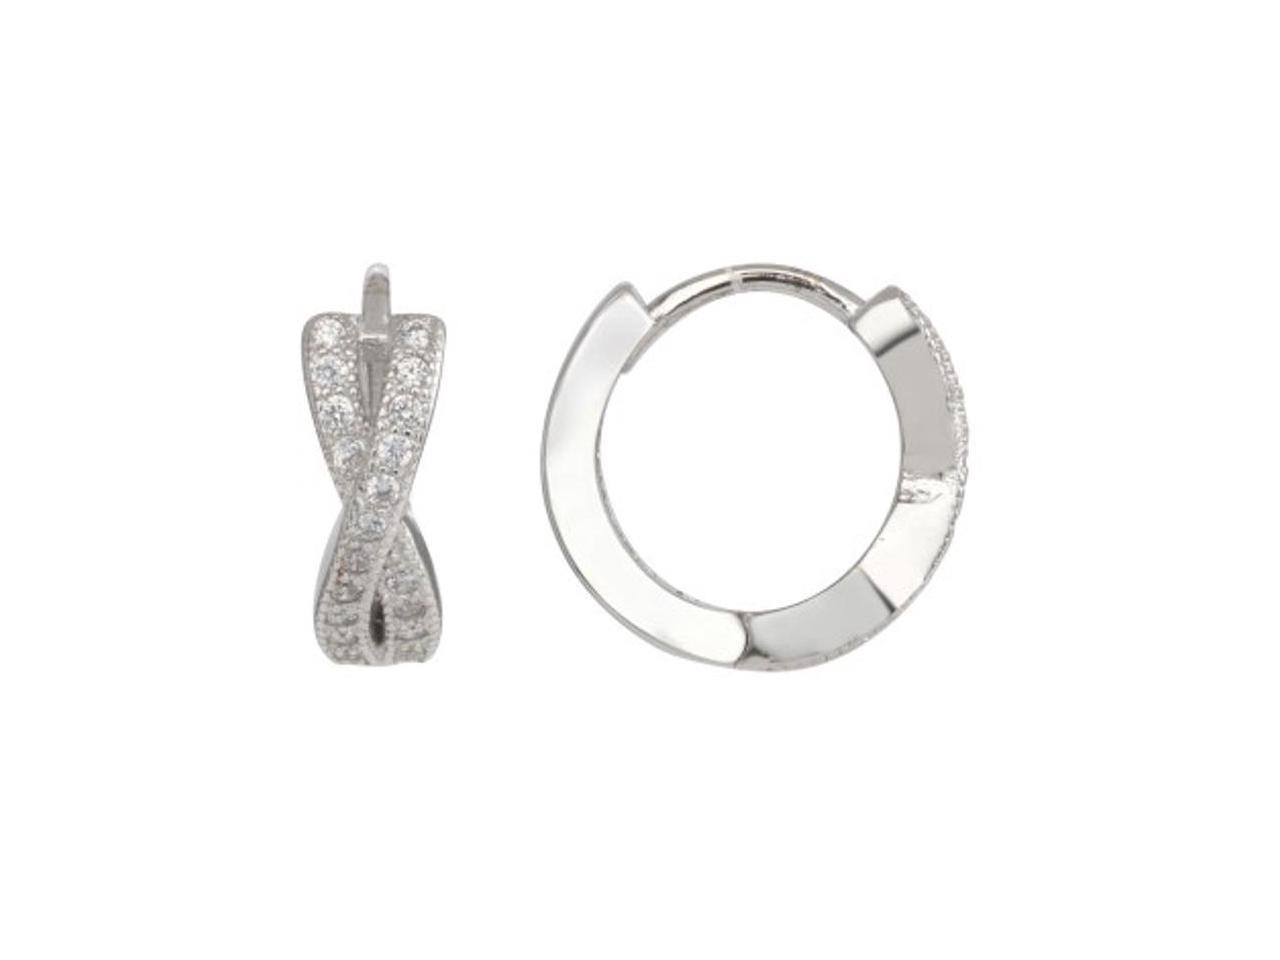 Wedding Band Glitzs Jewels 925 Sterling Silver Hollow Hoop Earrings for Women in Gift Box 4 mm 